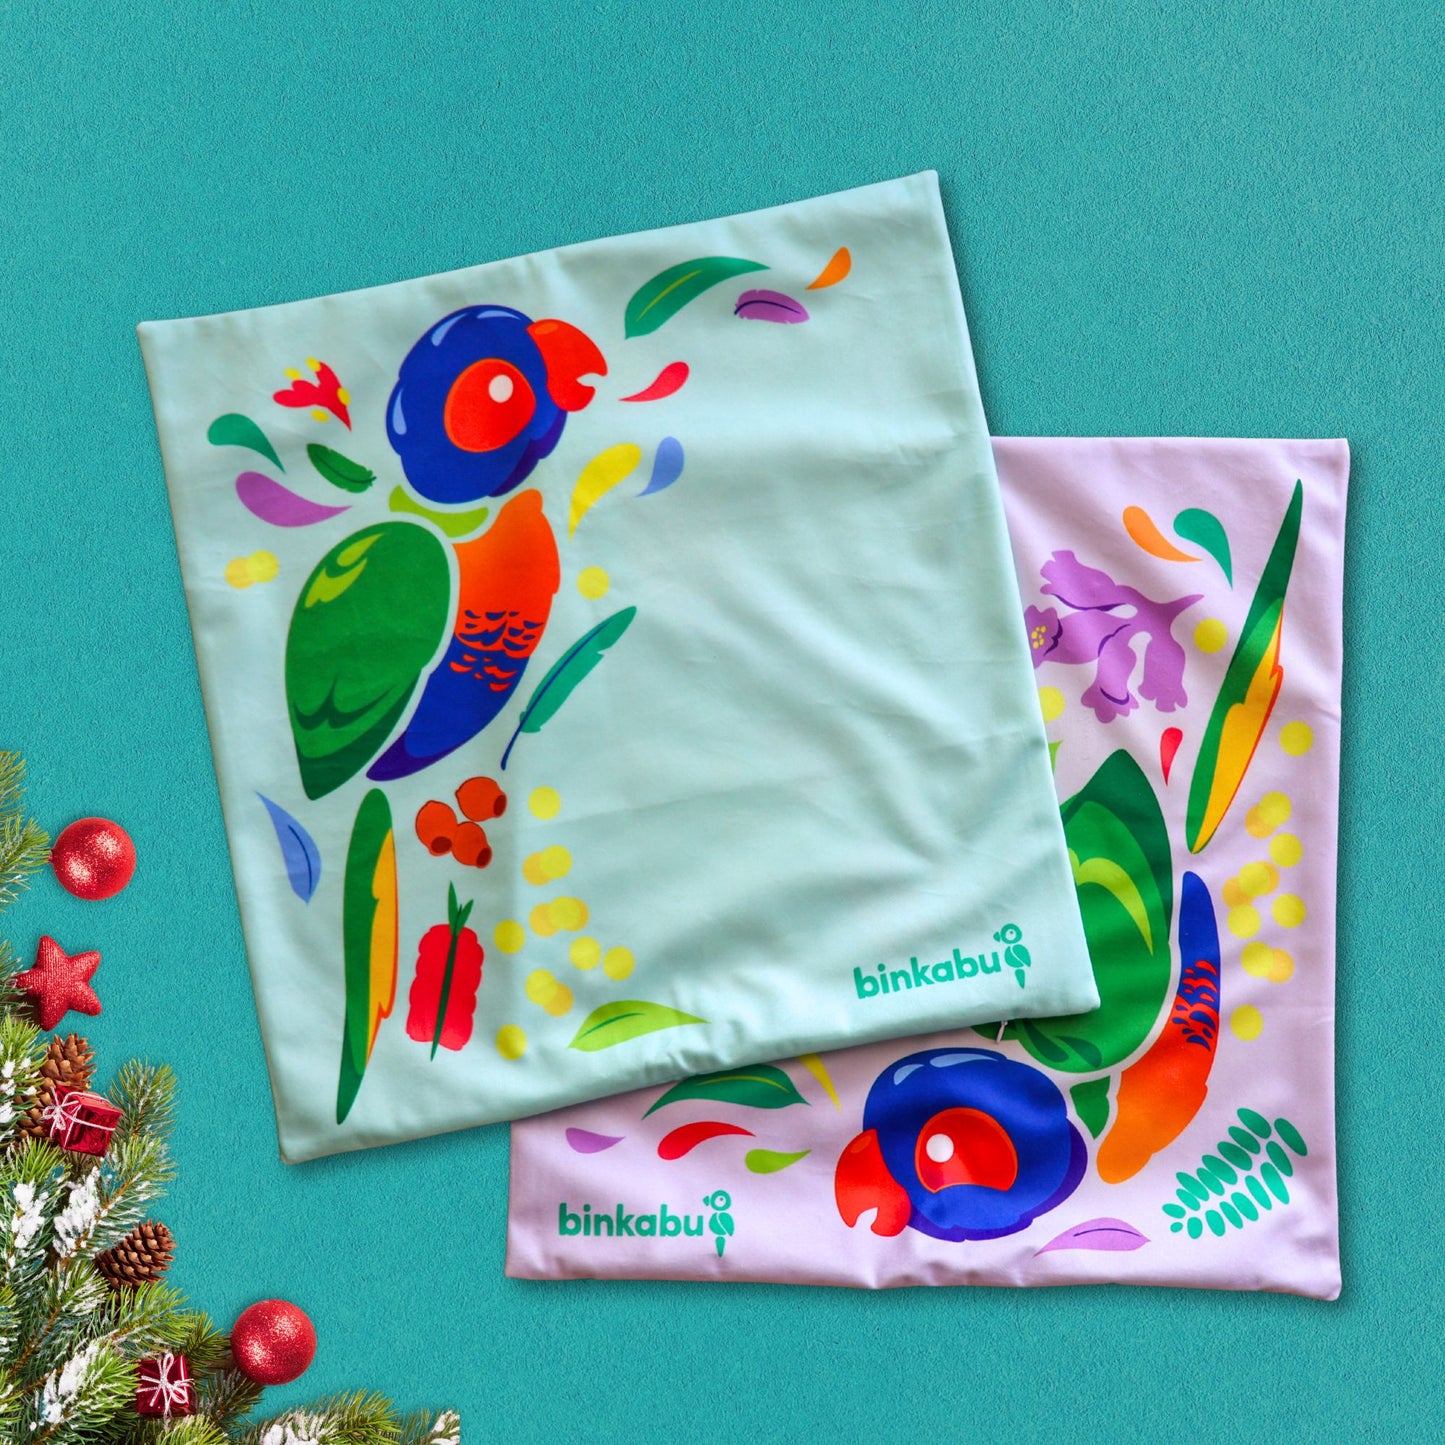 BINKABU Cushion Covers 2-pack - 2023 Advent Calendar